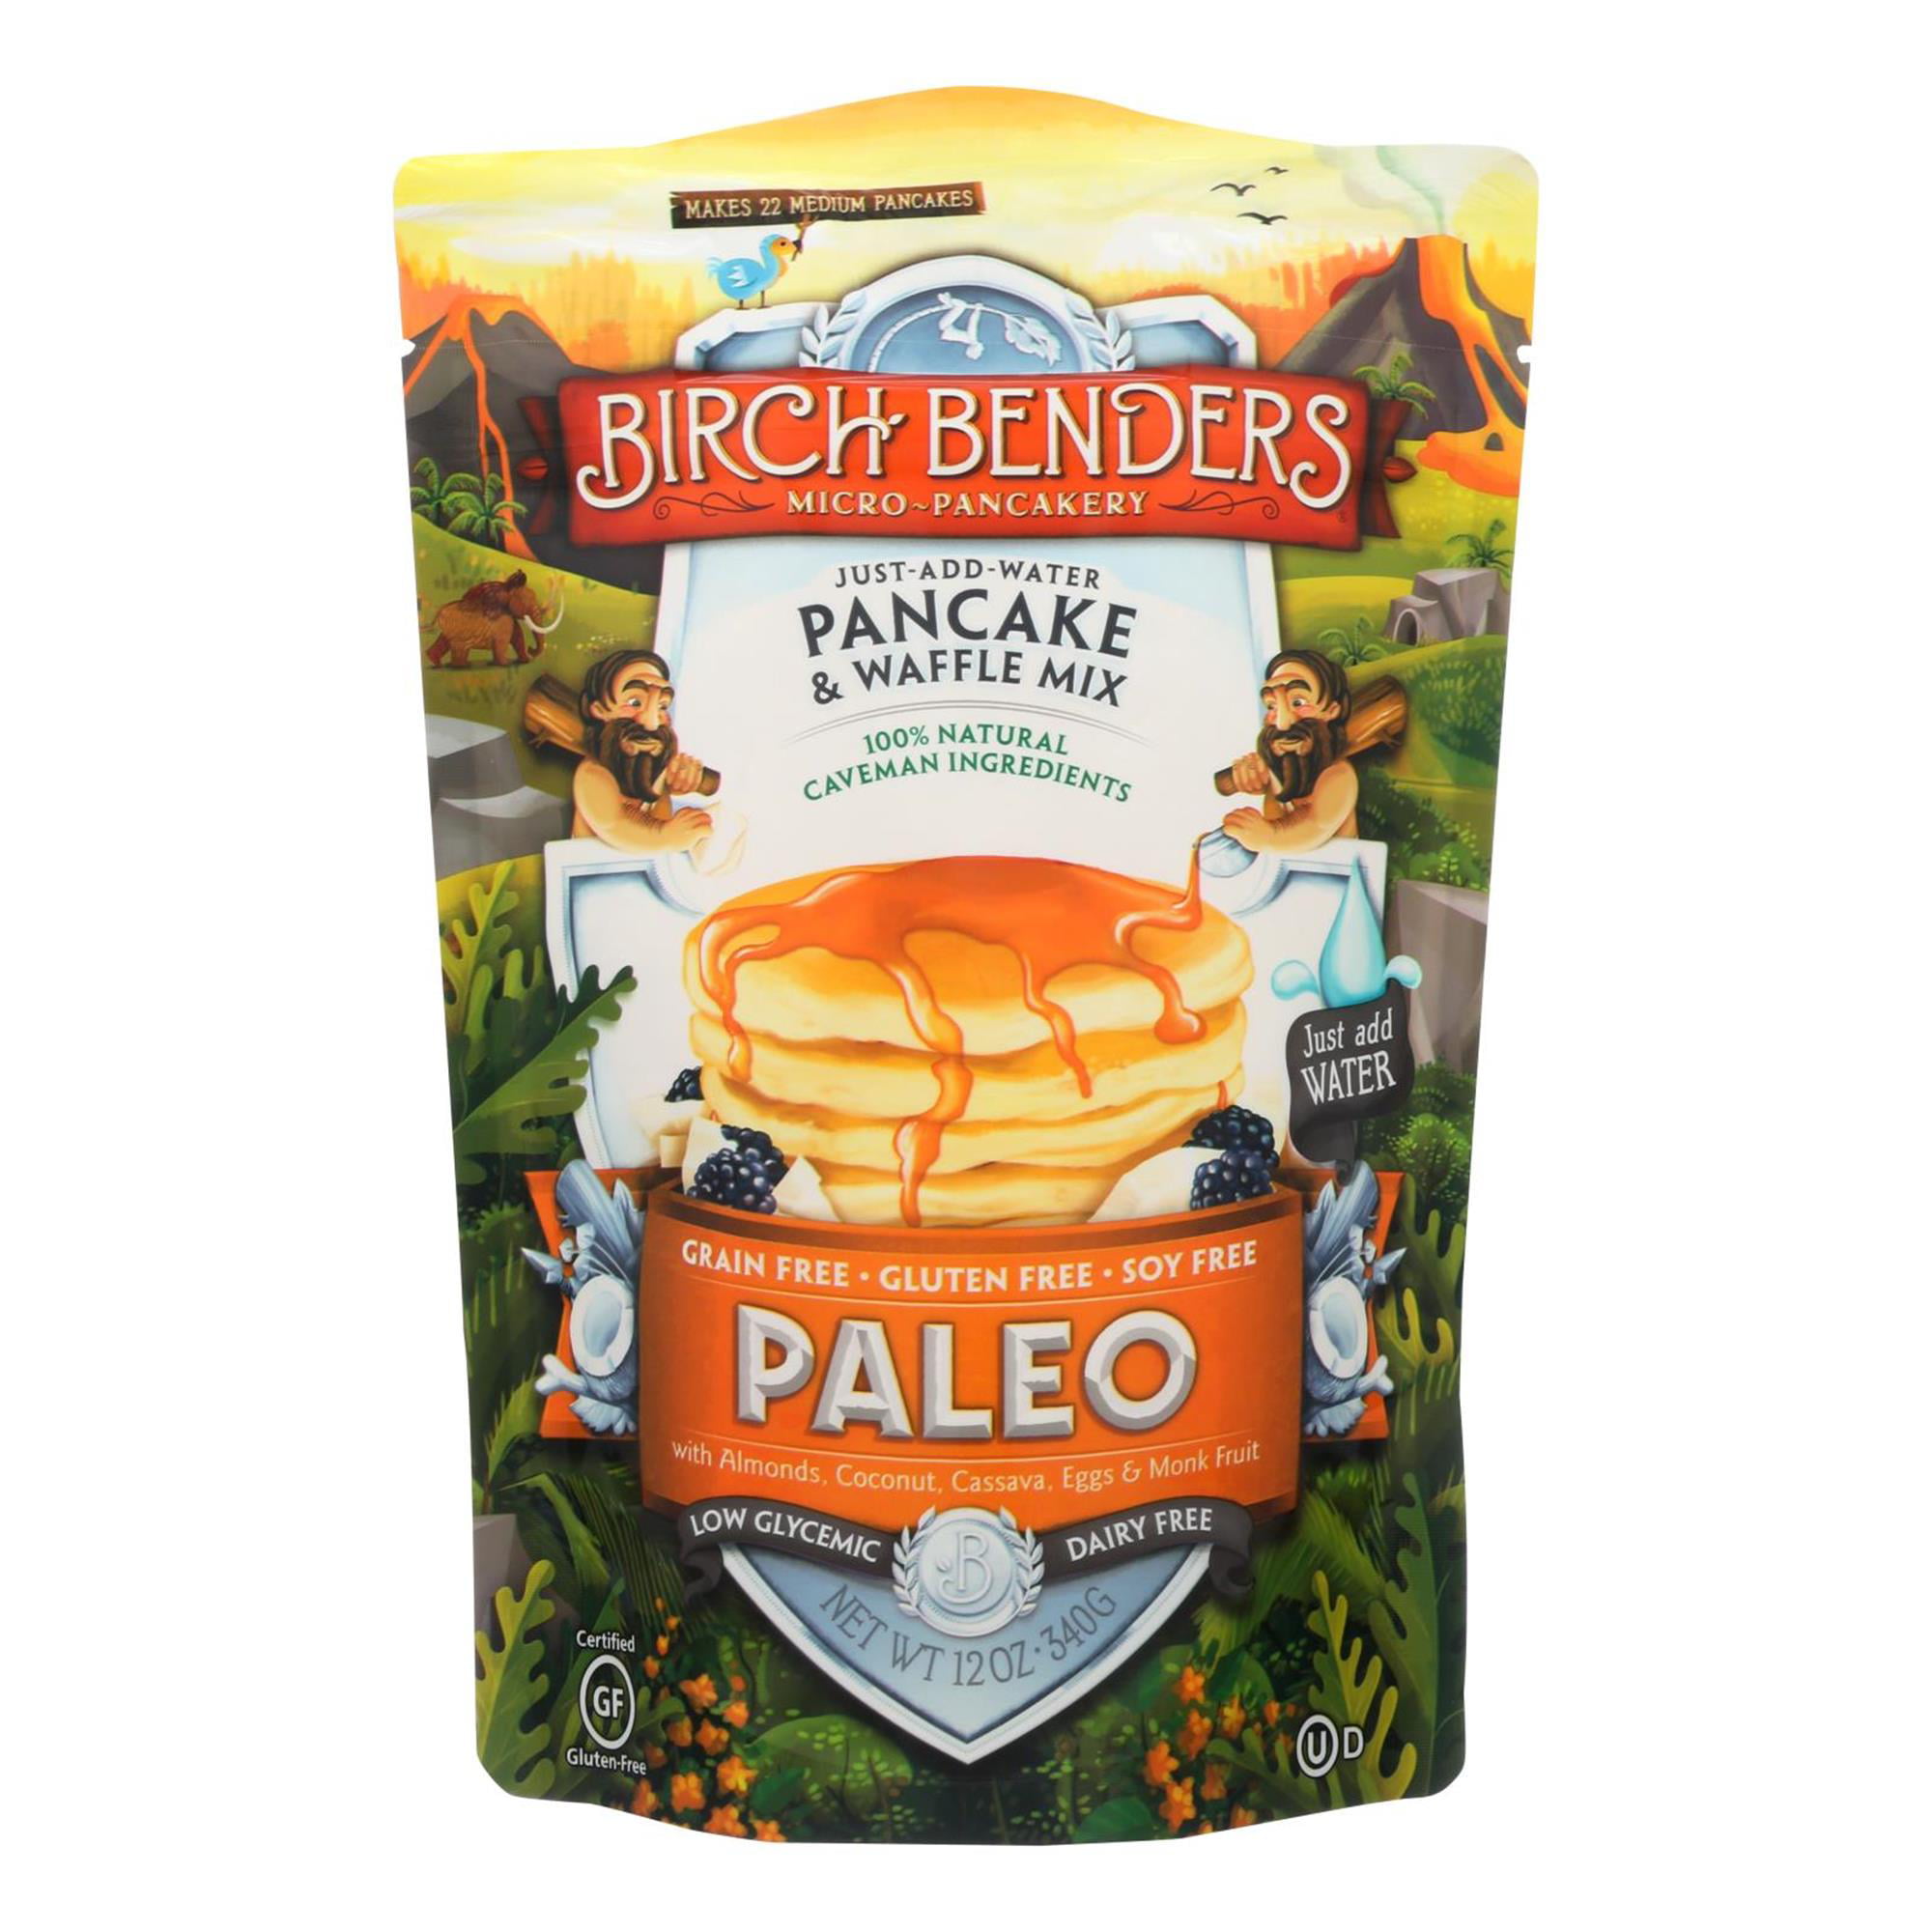 Birch Benders Paleo Pancake & Waffle Mix, 12oz